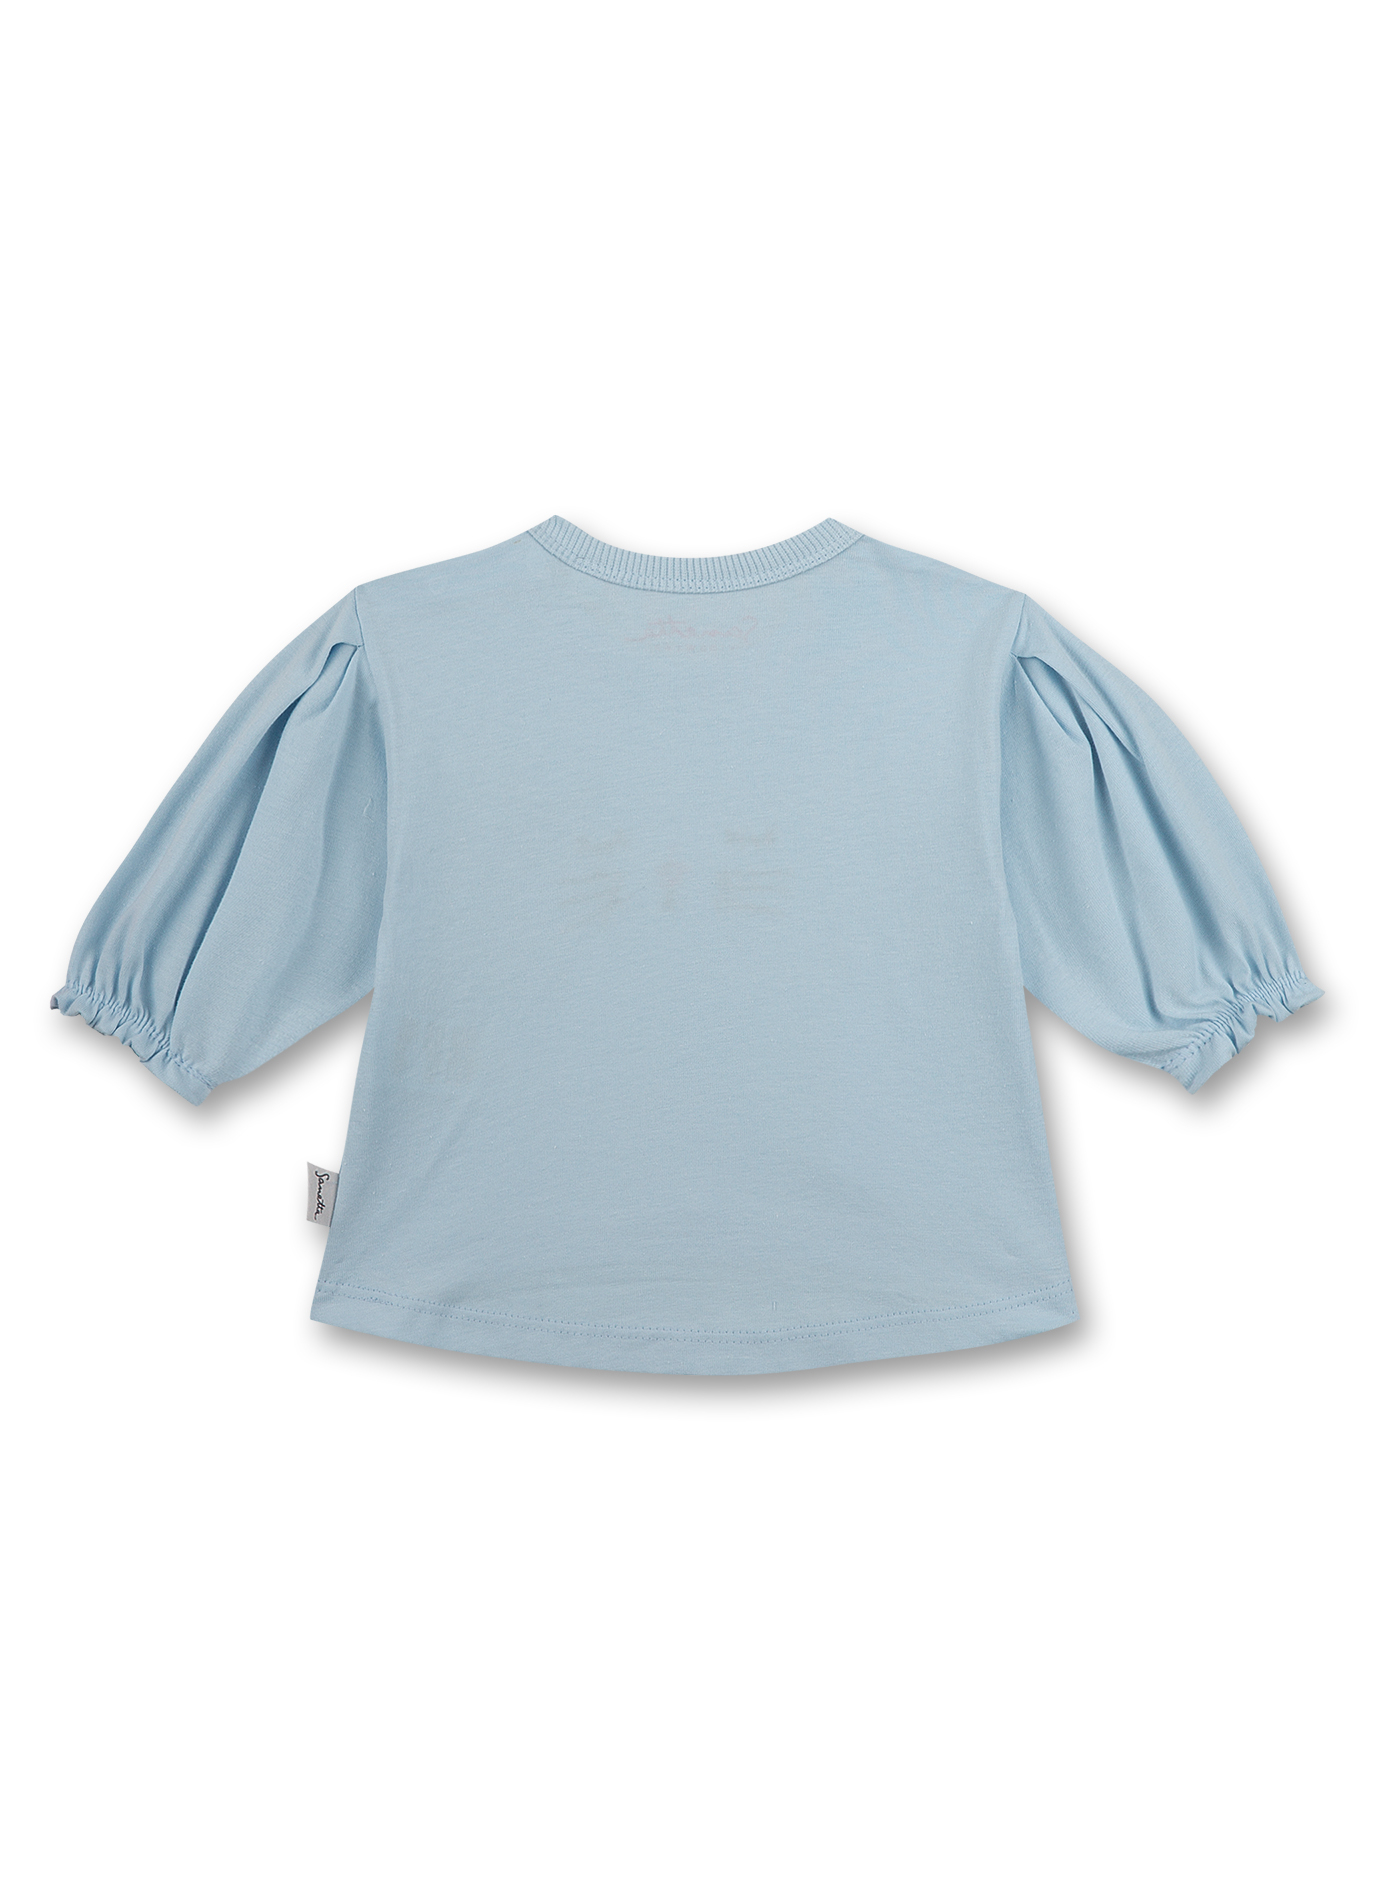 Mädchen-Shirt langarm Hellblau Lovely Leo